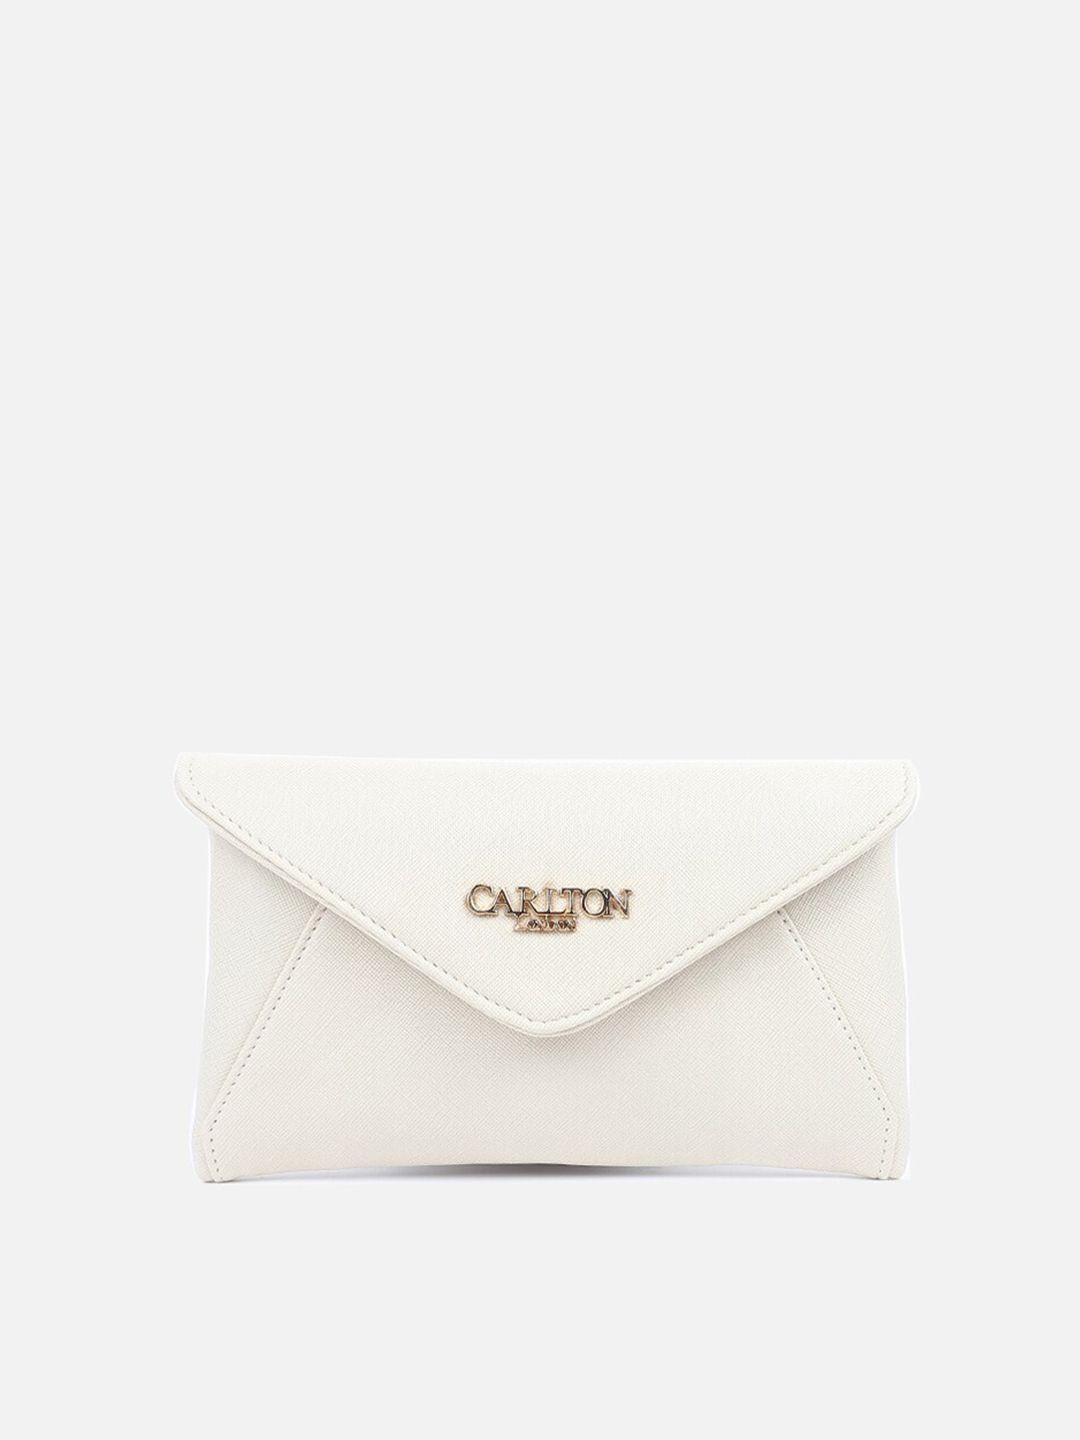 carlton london synthetic purse clutch